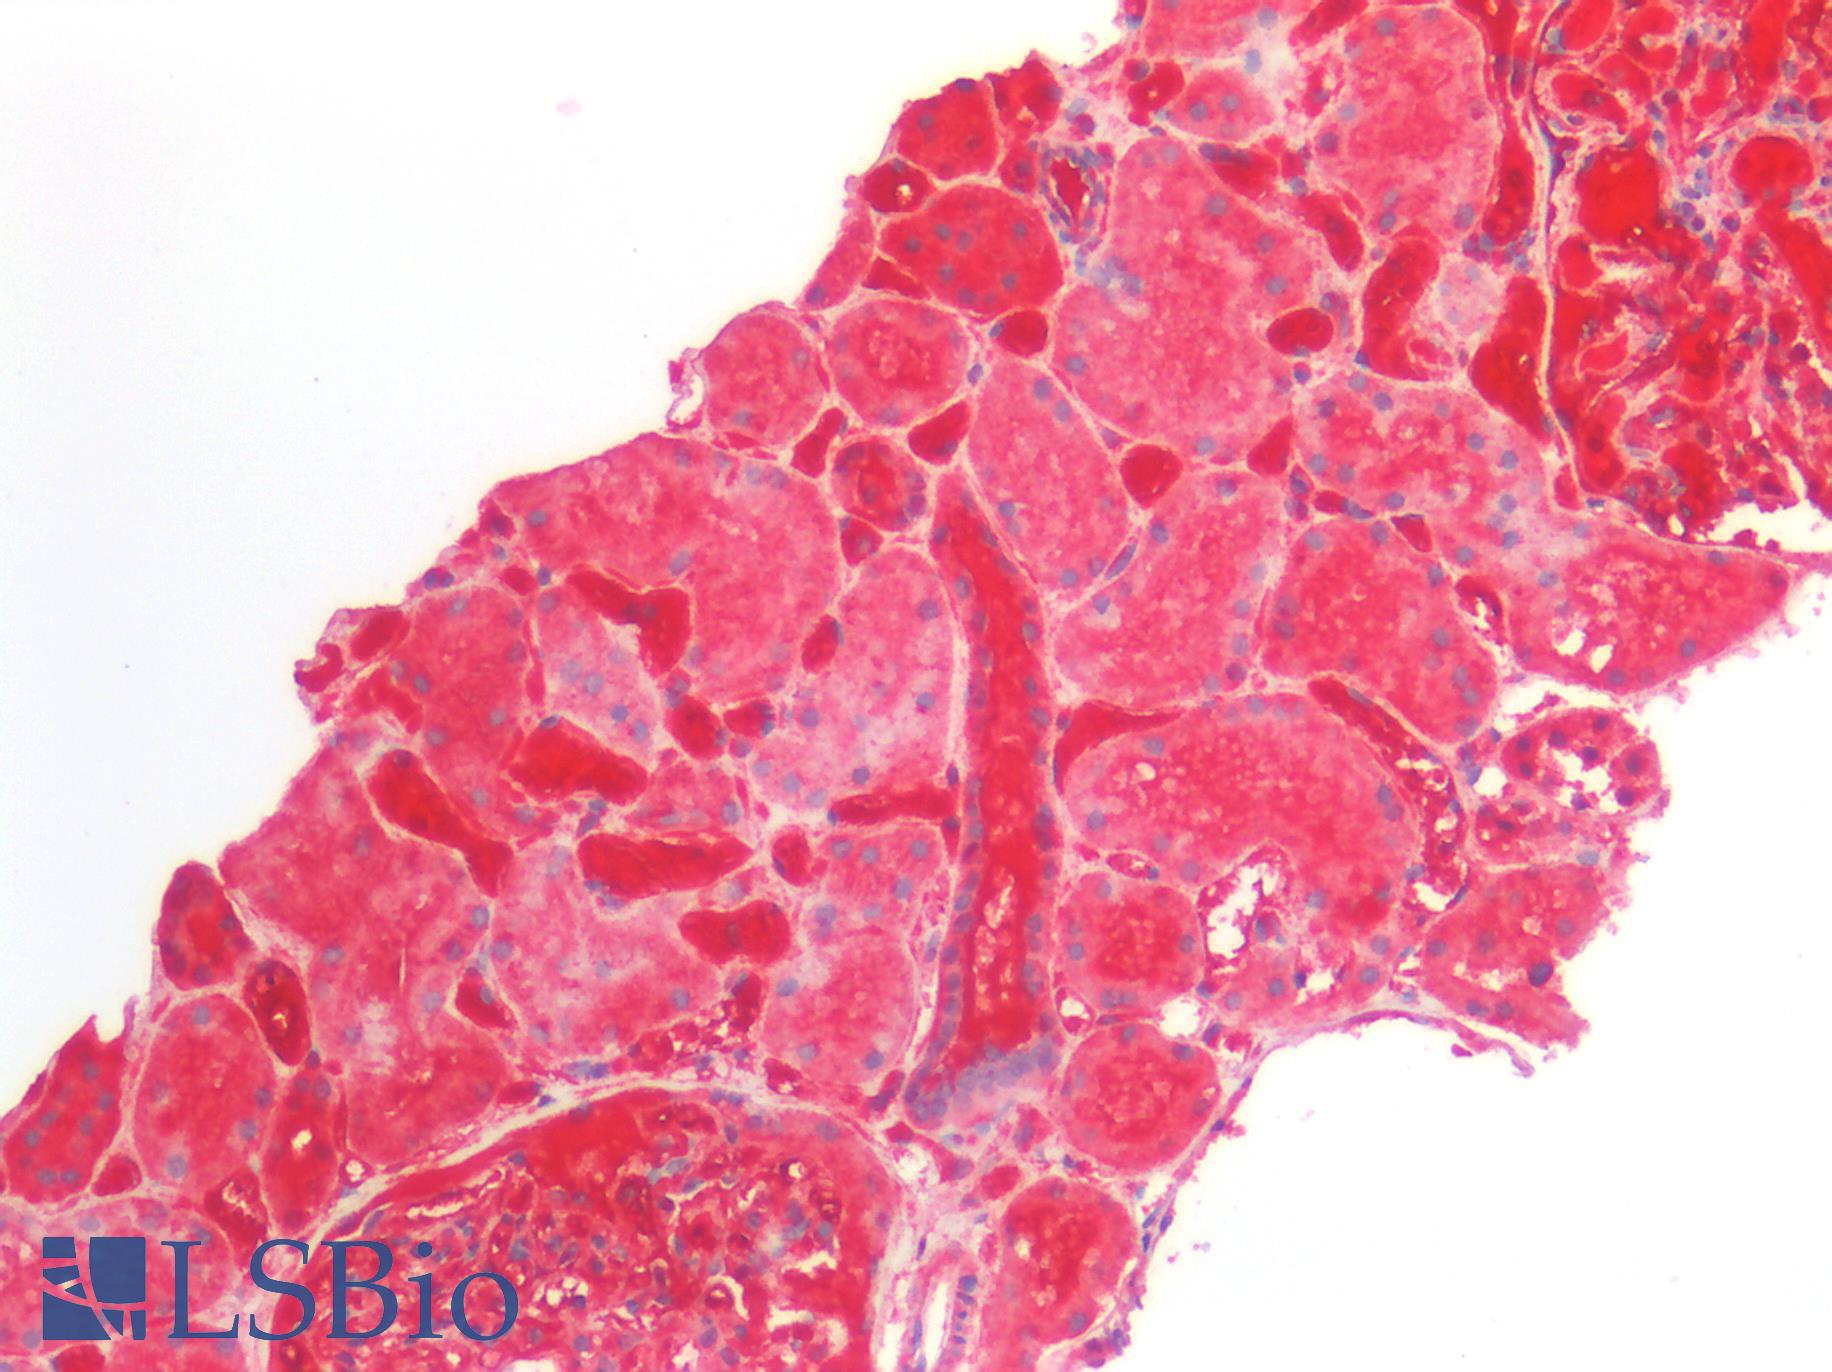 ATG16L1 / ATG16L Antibody - Human Kidney: Formalin-Fixed, Paraffin-Embedded (FFPE)